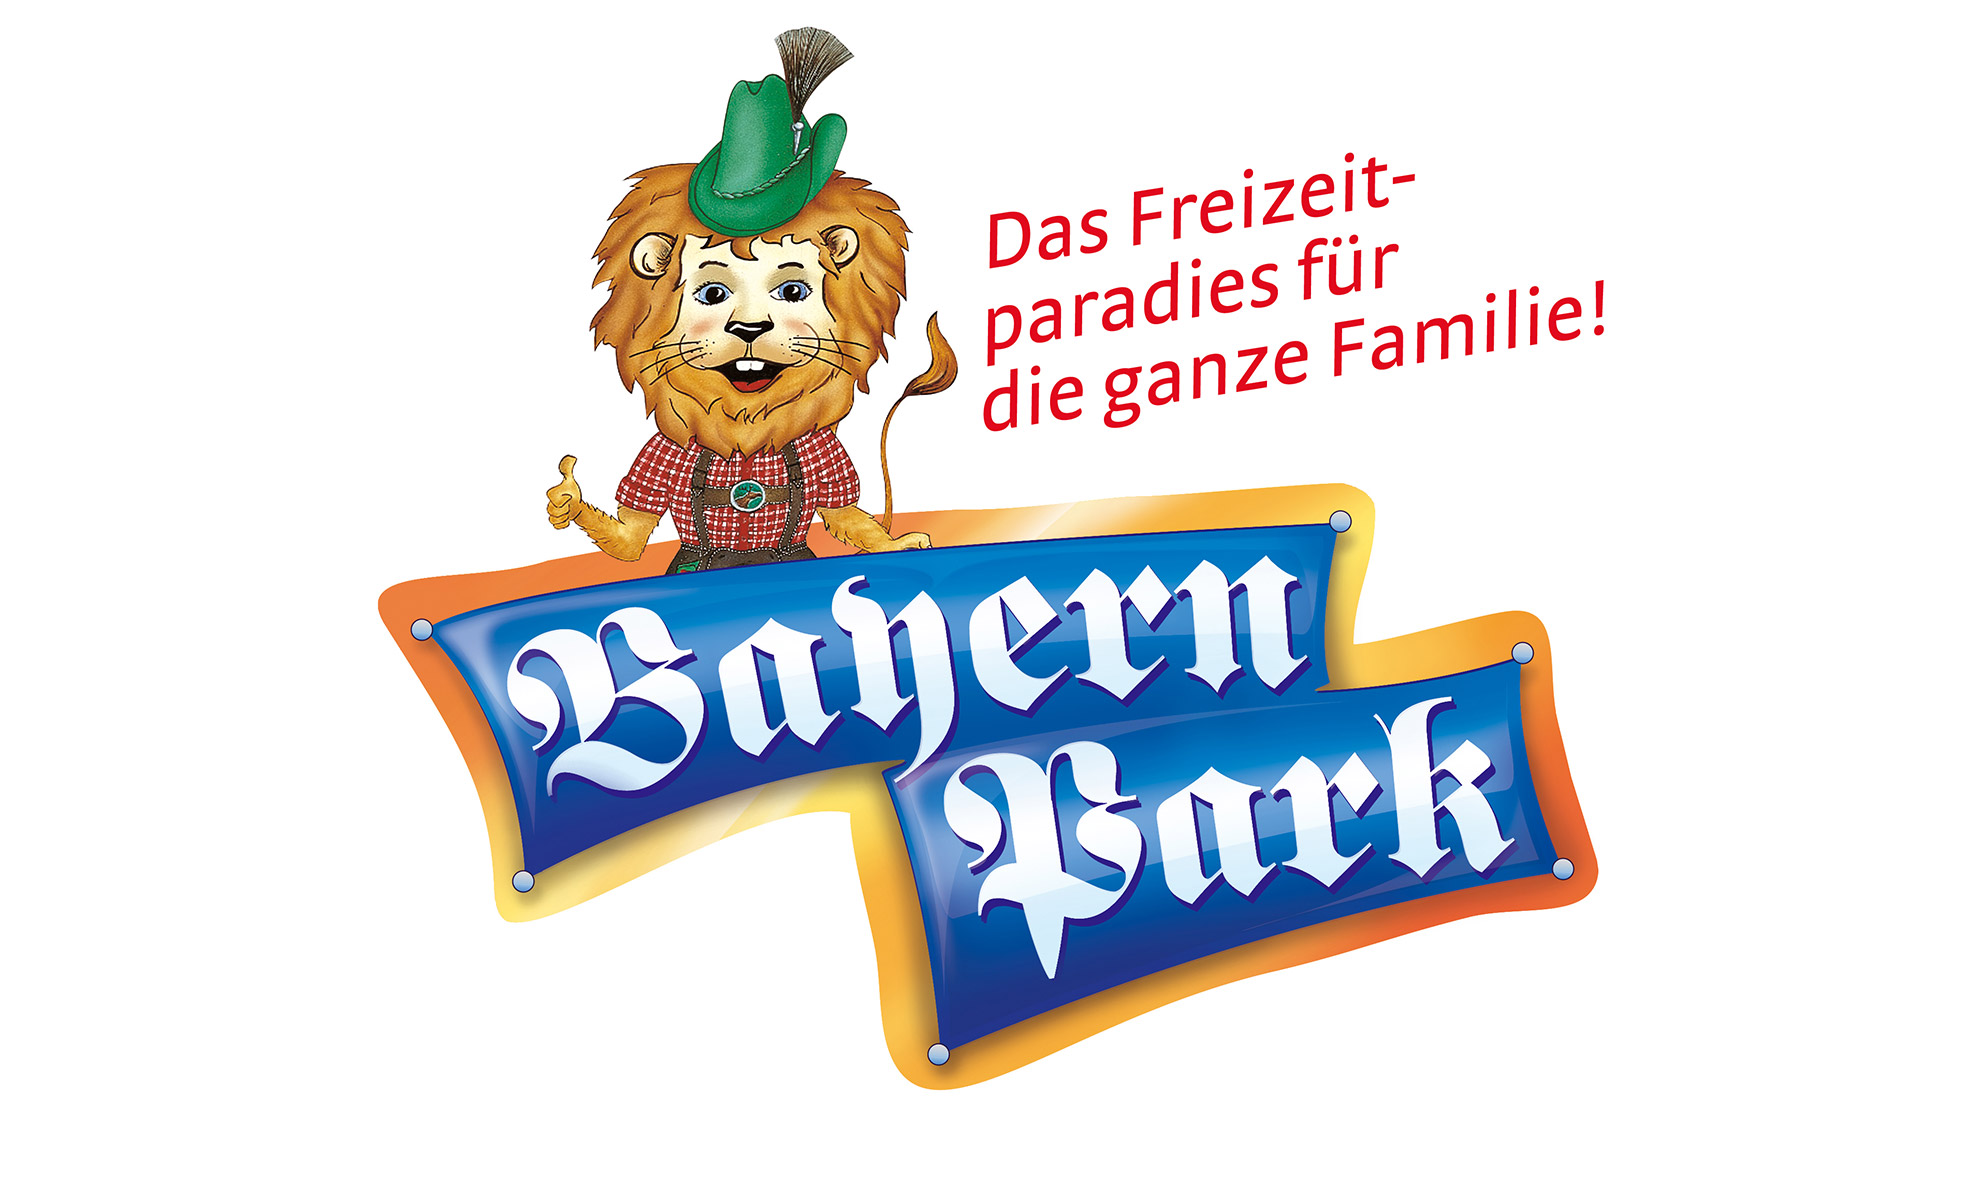 Bayern Park Logo